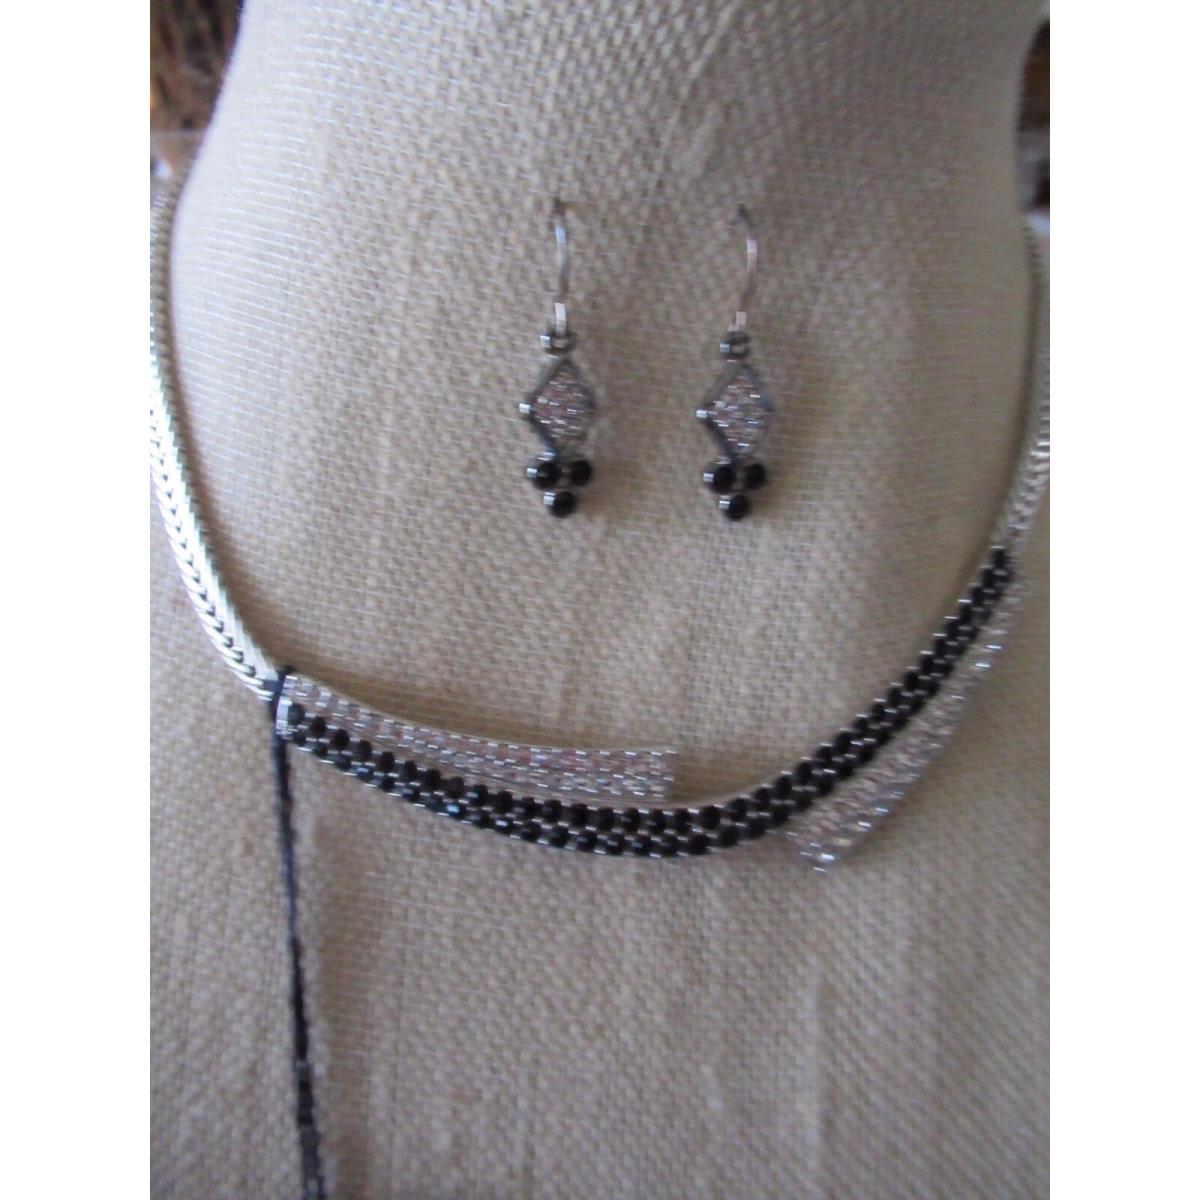 Swarovski Clear/ Black Stone Silver Tone/ Choker Necklace/matching Earrings